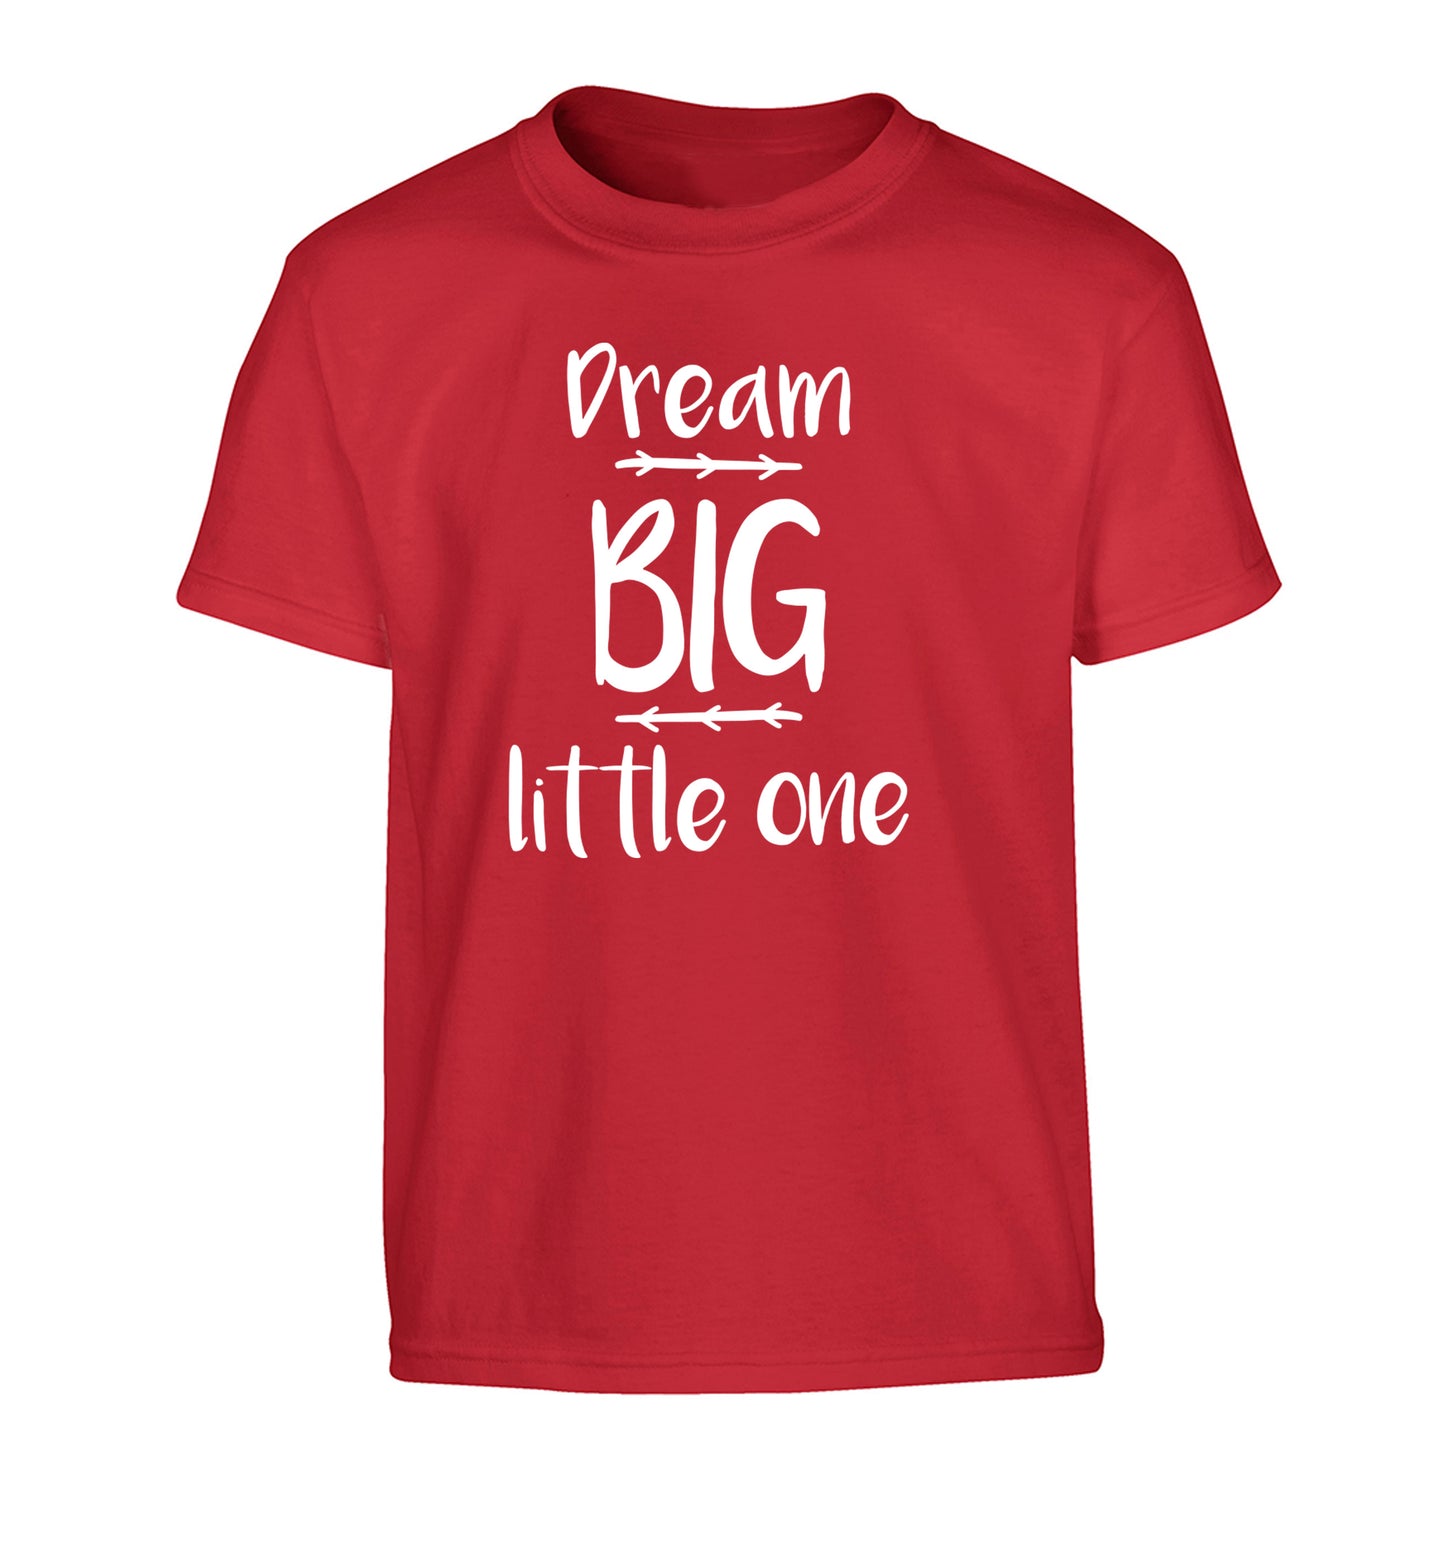 Dream big little one Children's red Tshirt 12-14 Years